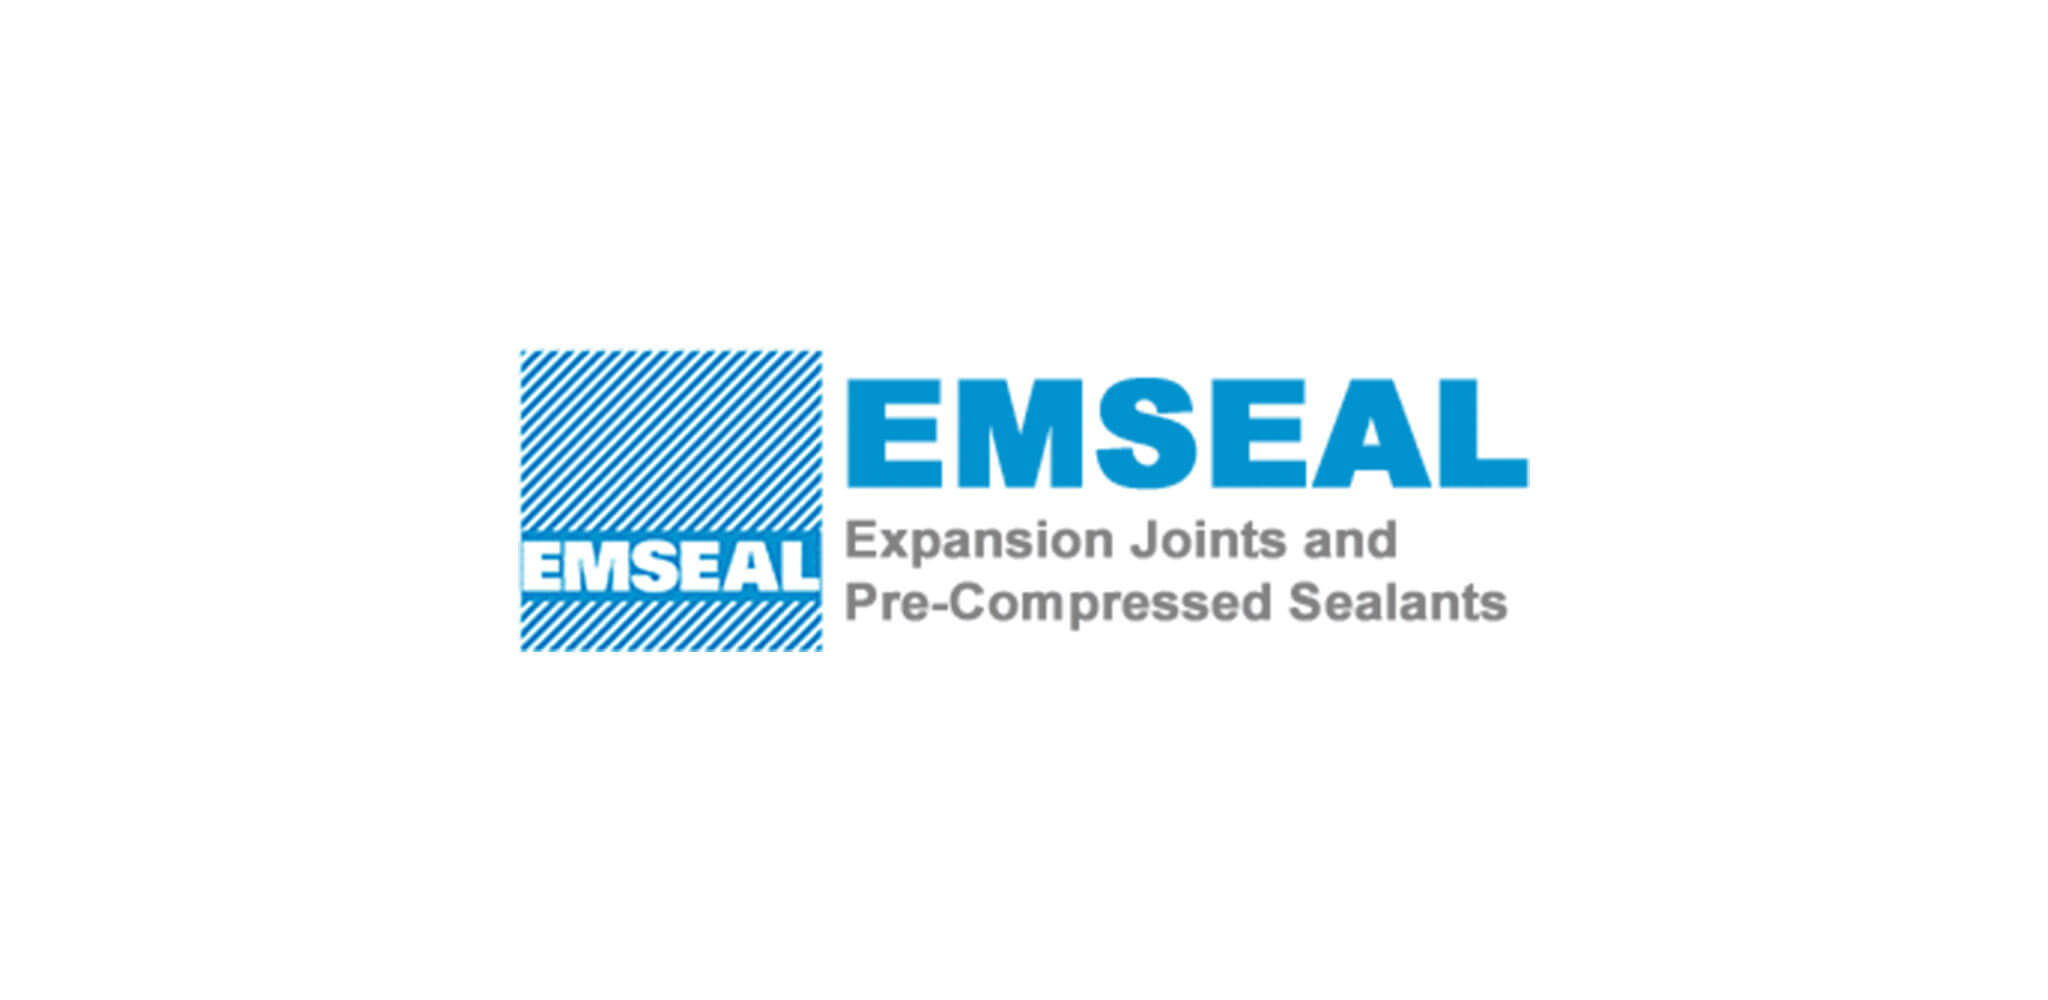 ca-career-emseal-acquisition-logo.jpg